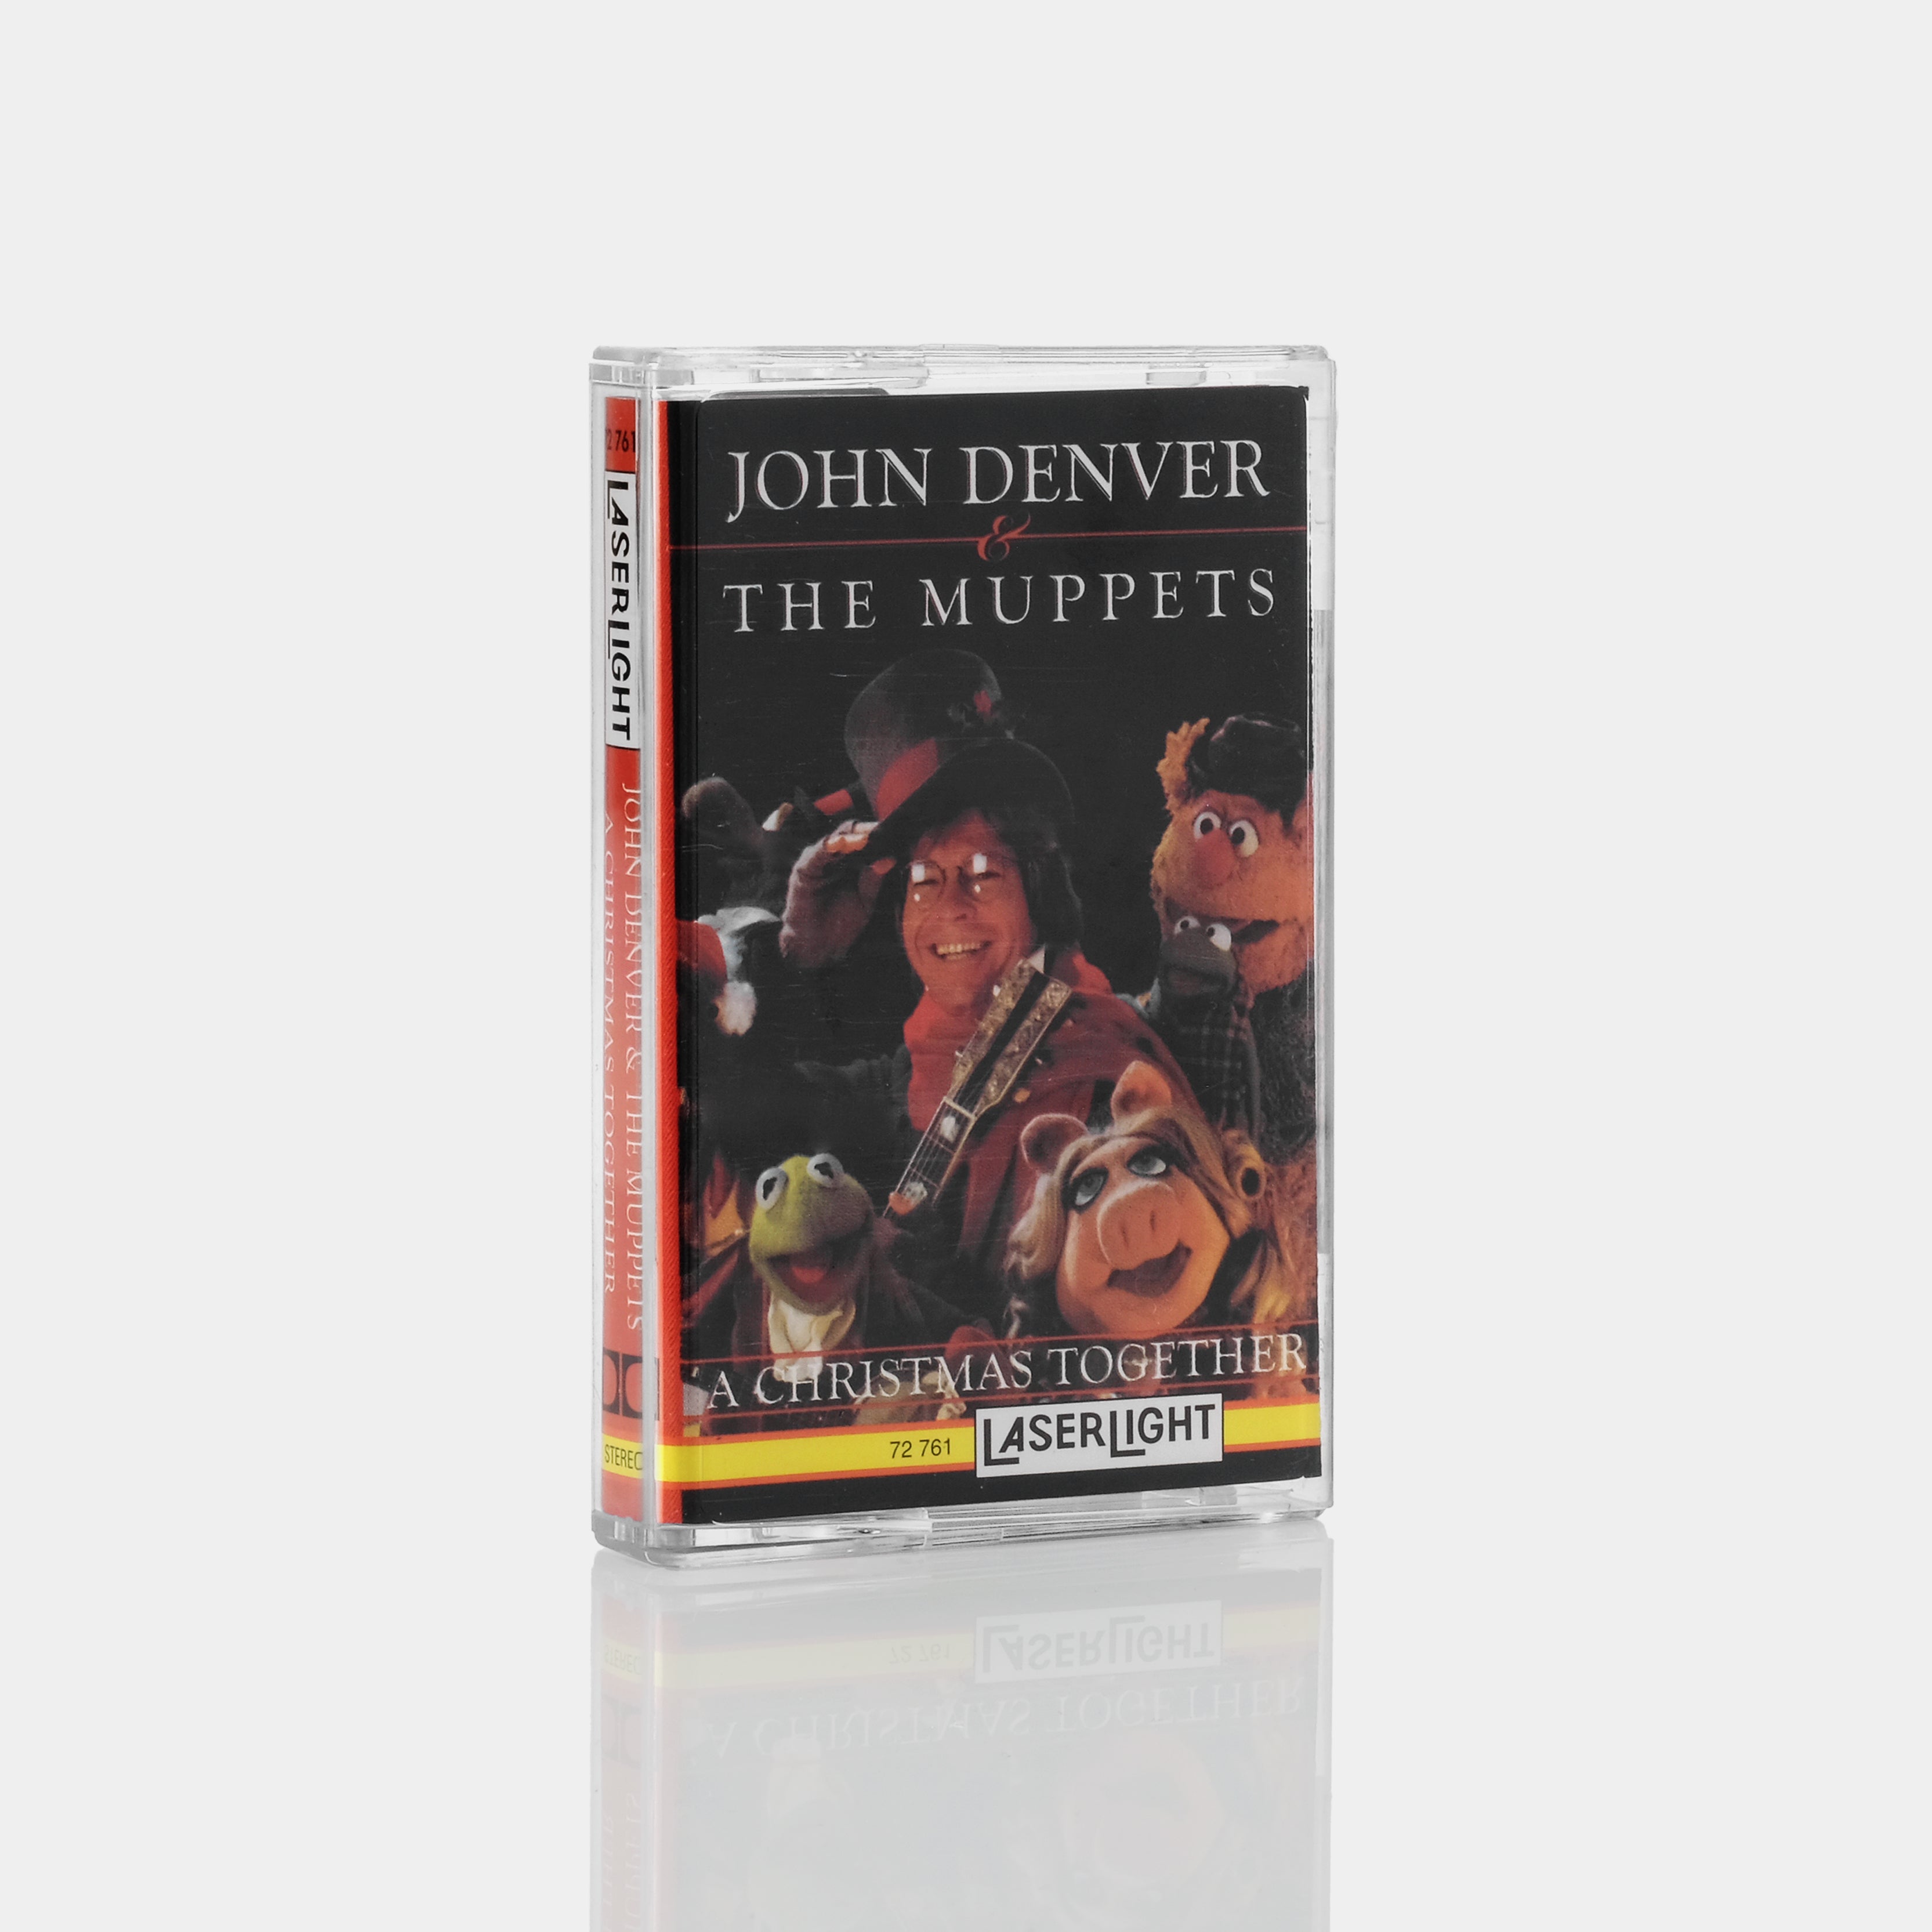 John Denver & The Muppets - A Christmas Together Cassette Tape